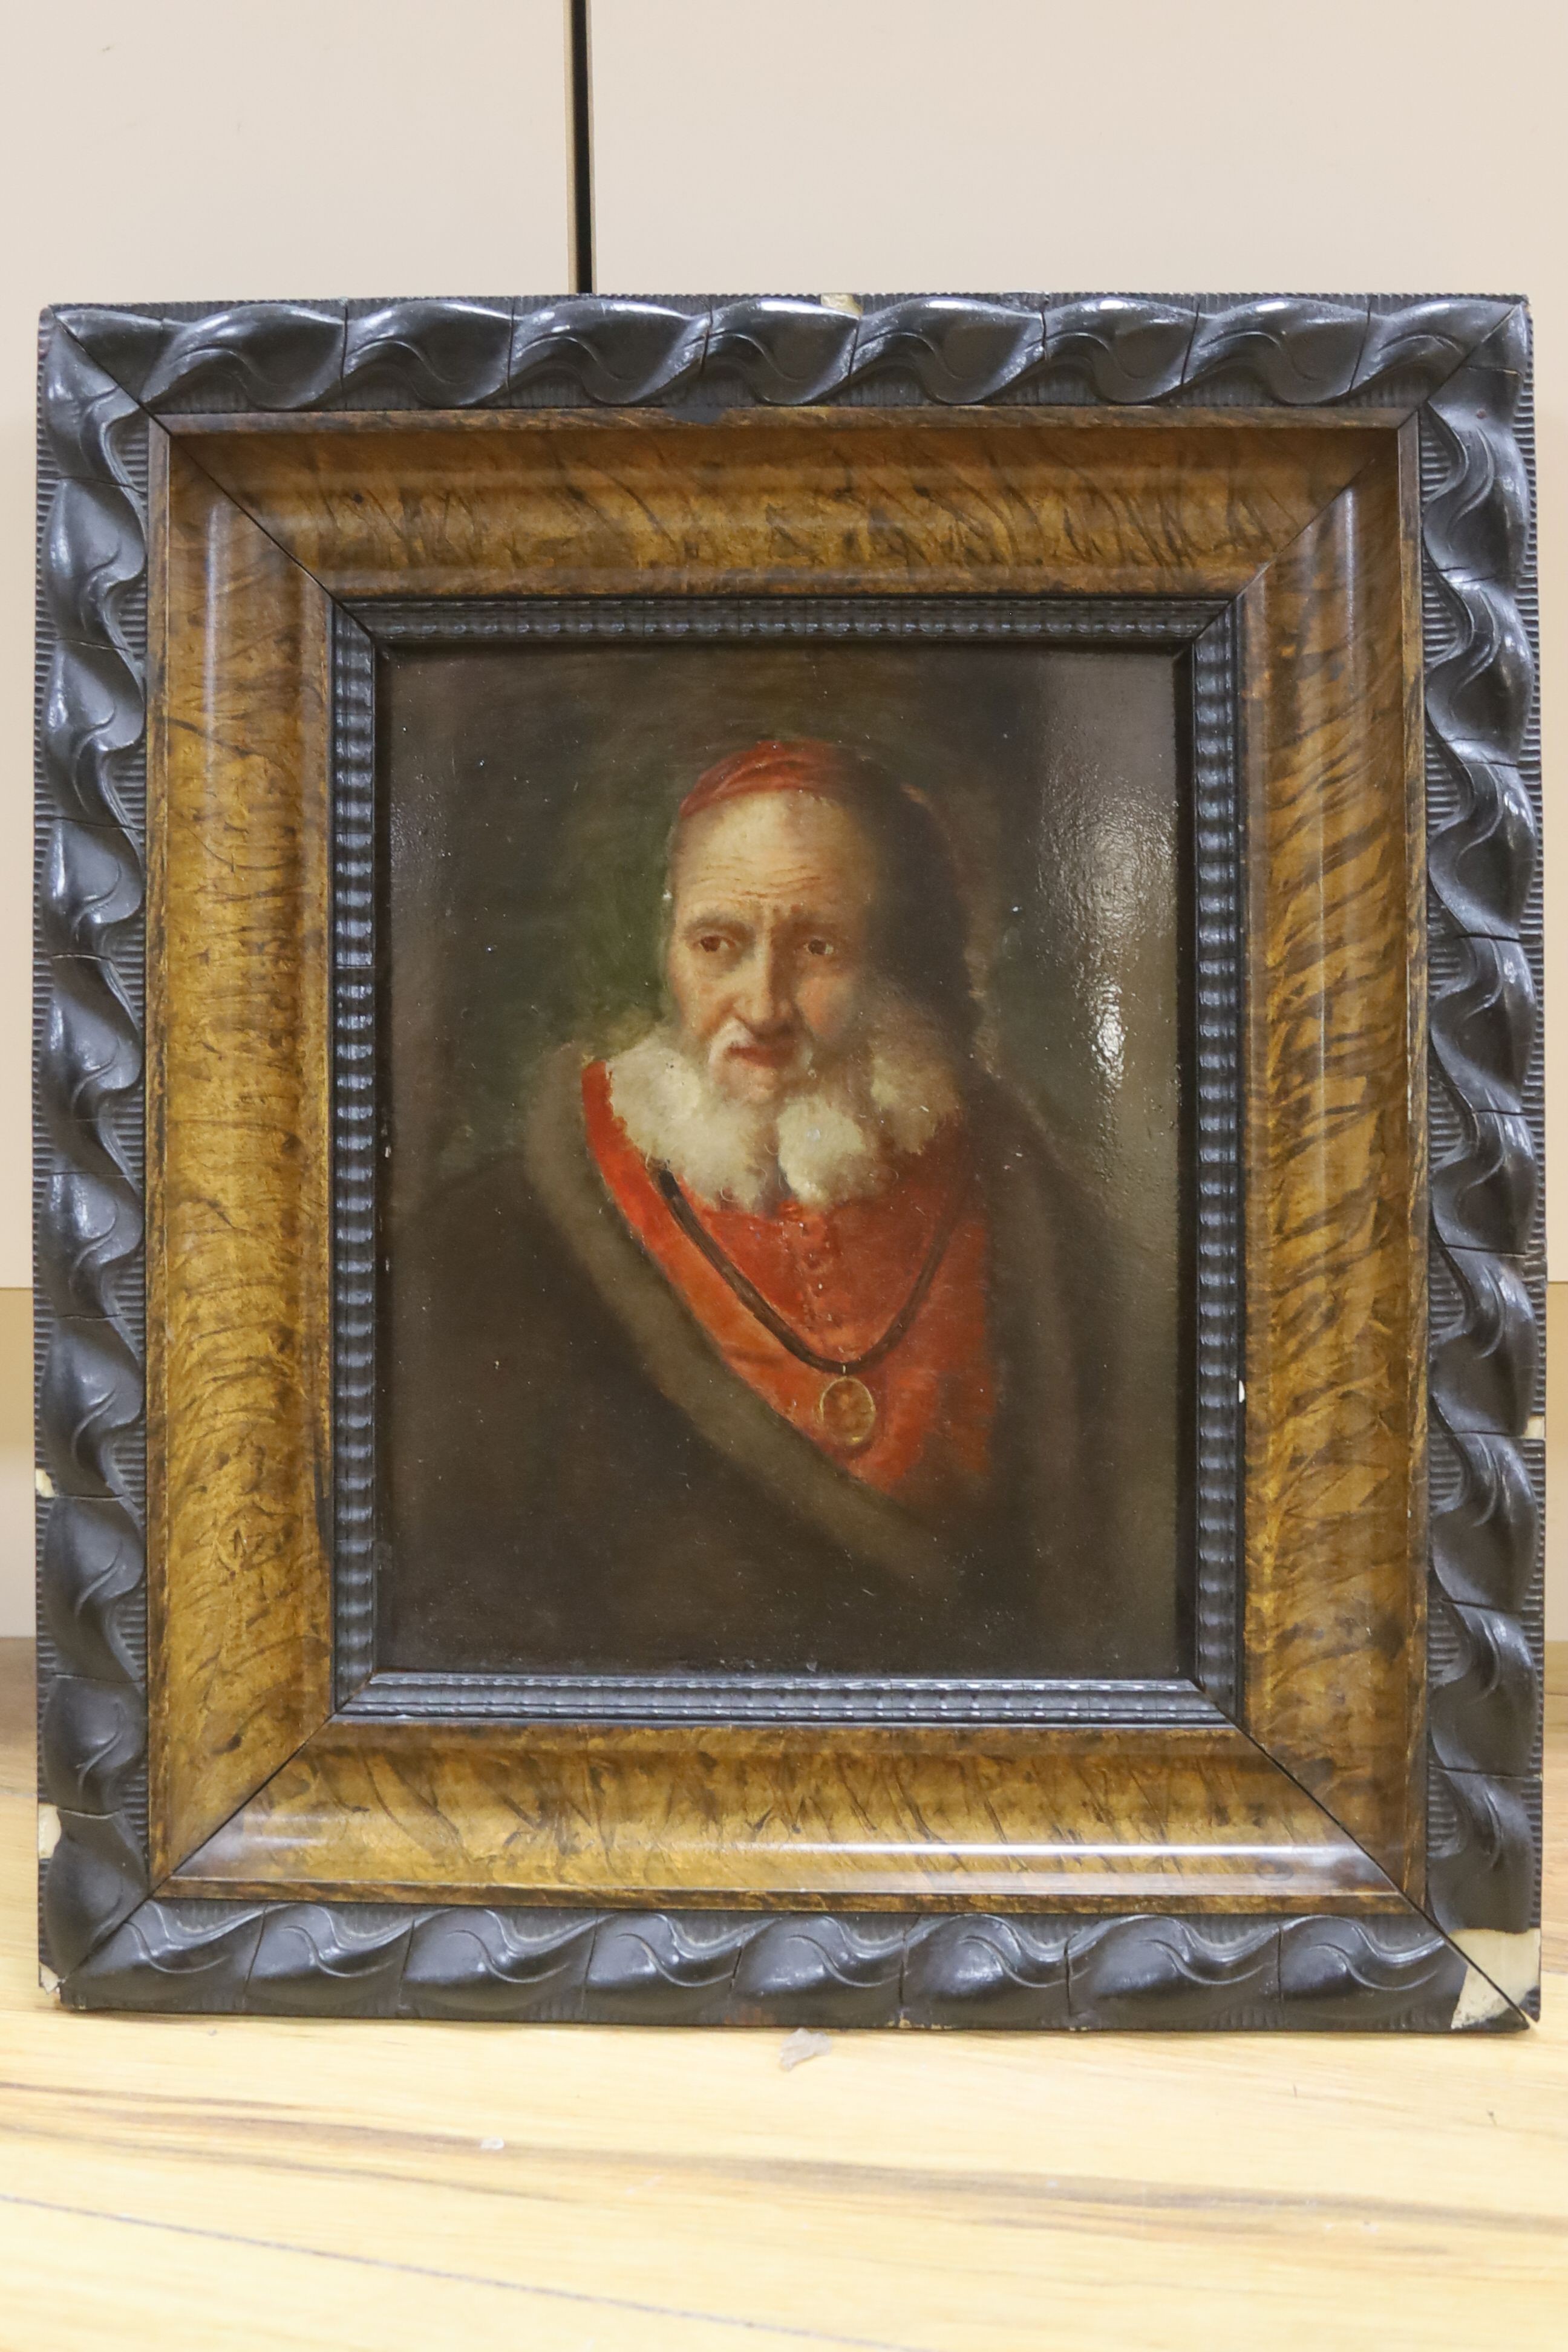 19th century Continental School, oil on panel, Portrait of a 17th century gentleman, 25 x 20cm